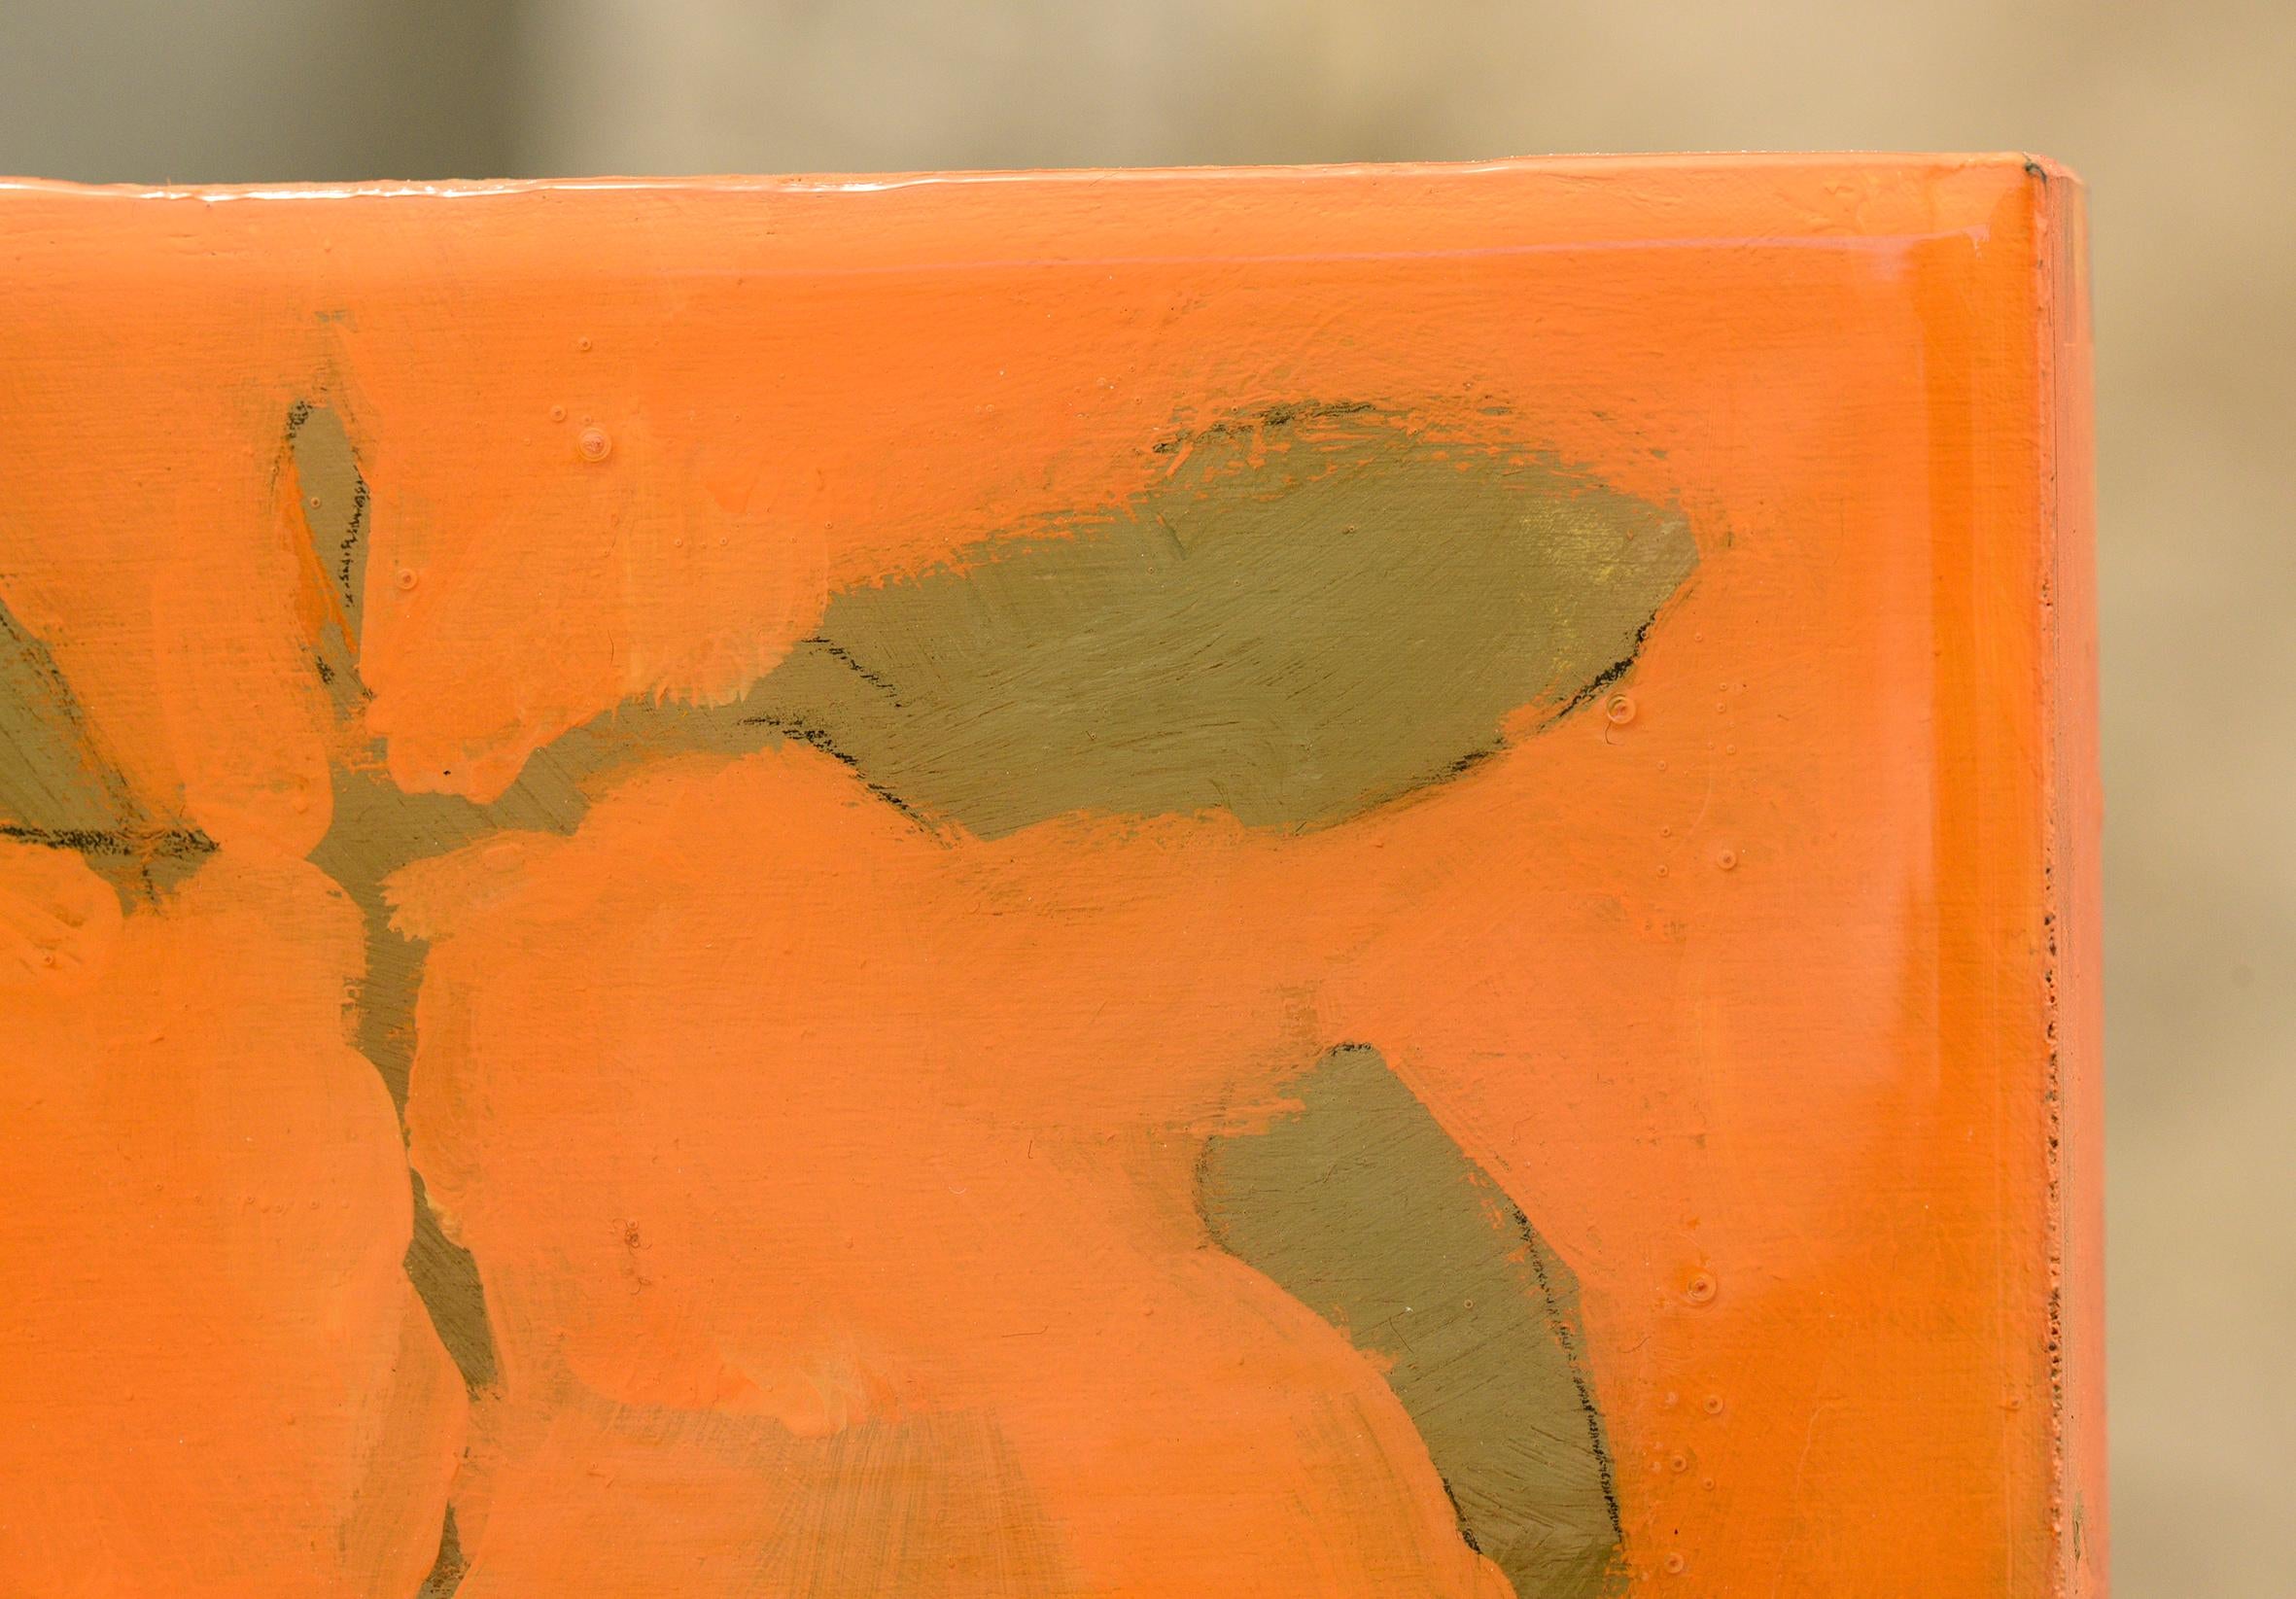 Astwerk_86 - Minimalist, Acrylic, Resin on Wood, 21st Century, Floral Painting - Orange Landscape Painting by Joanna Skurska